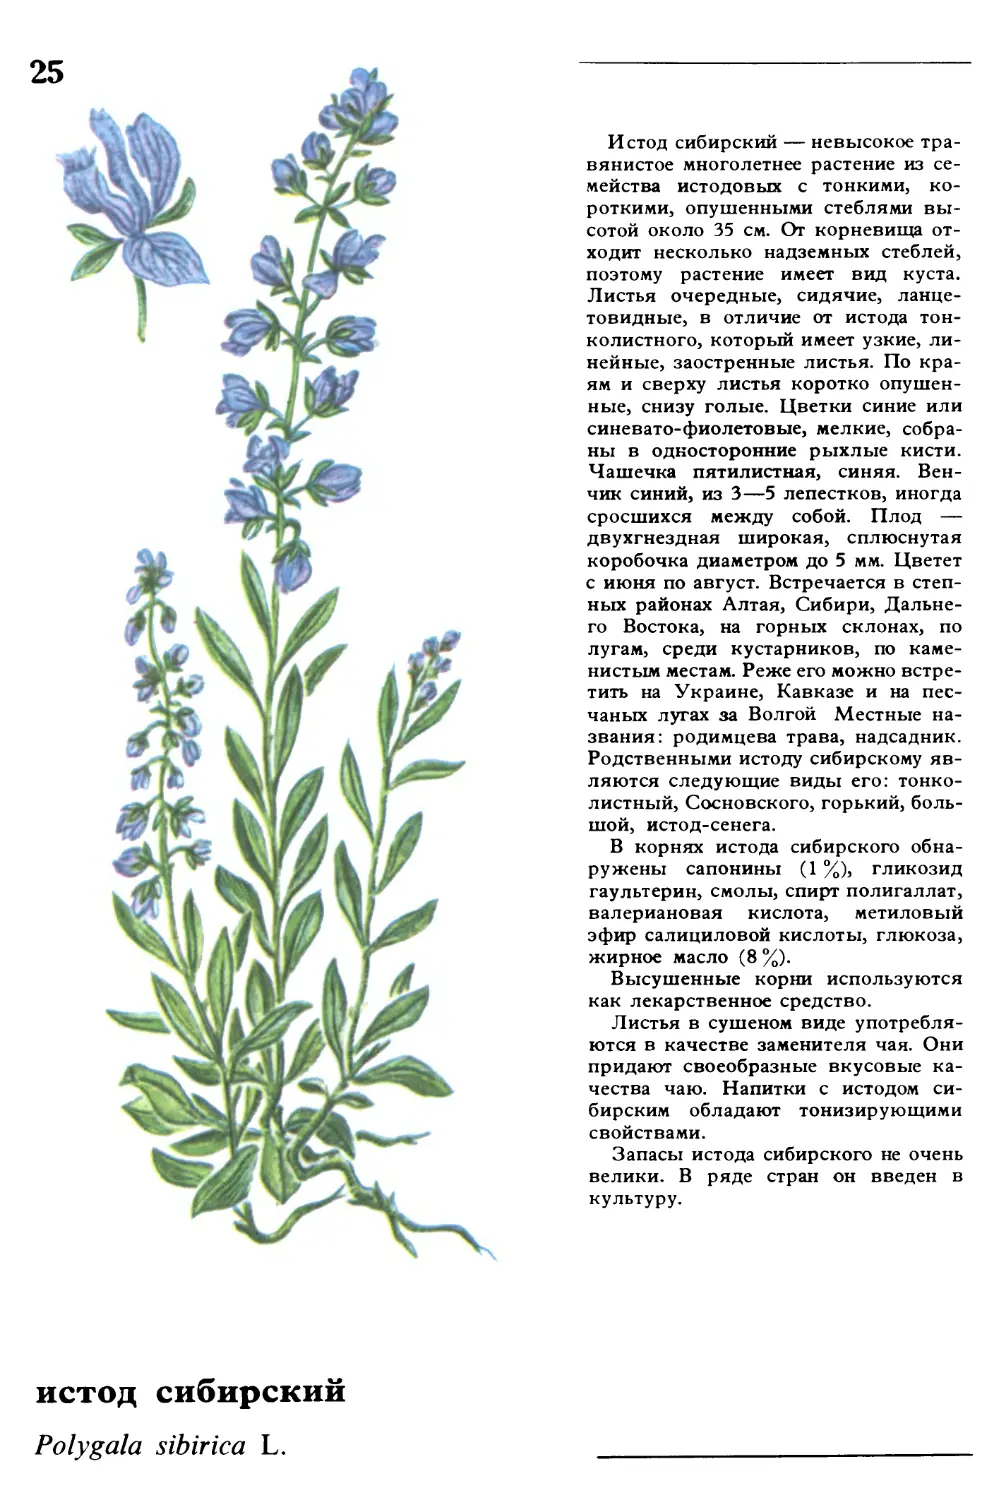 Истод сибирский
истод сибирский
Напиток из звездчатки
Polygala sibirica L.